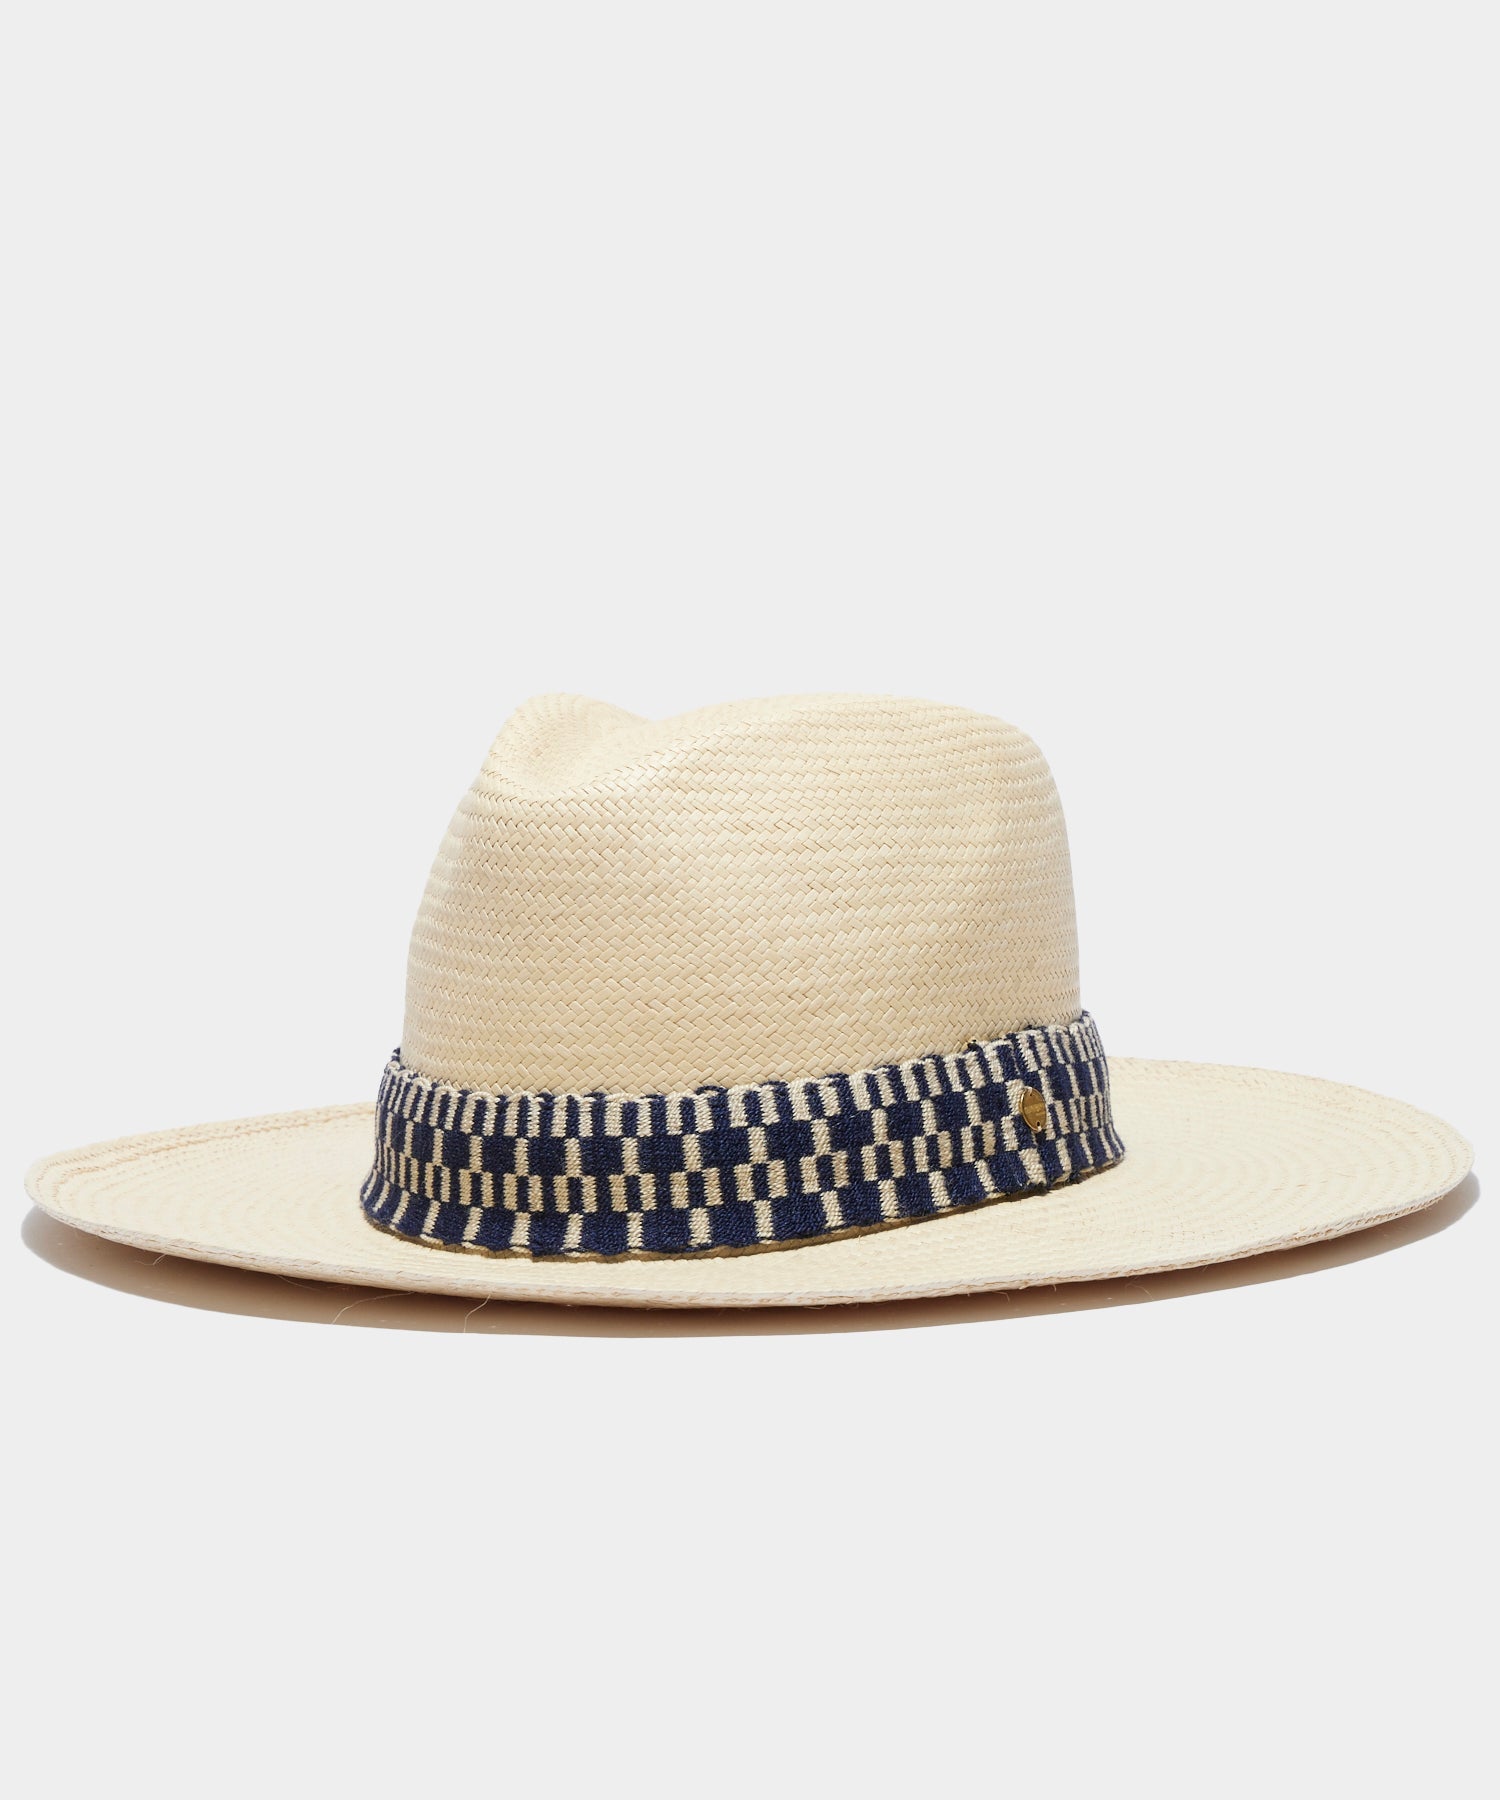 Guanábana Panama Hat with Navy Checker Band